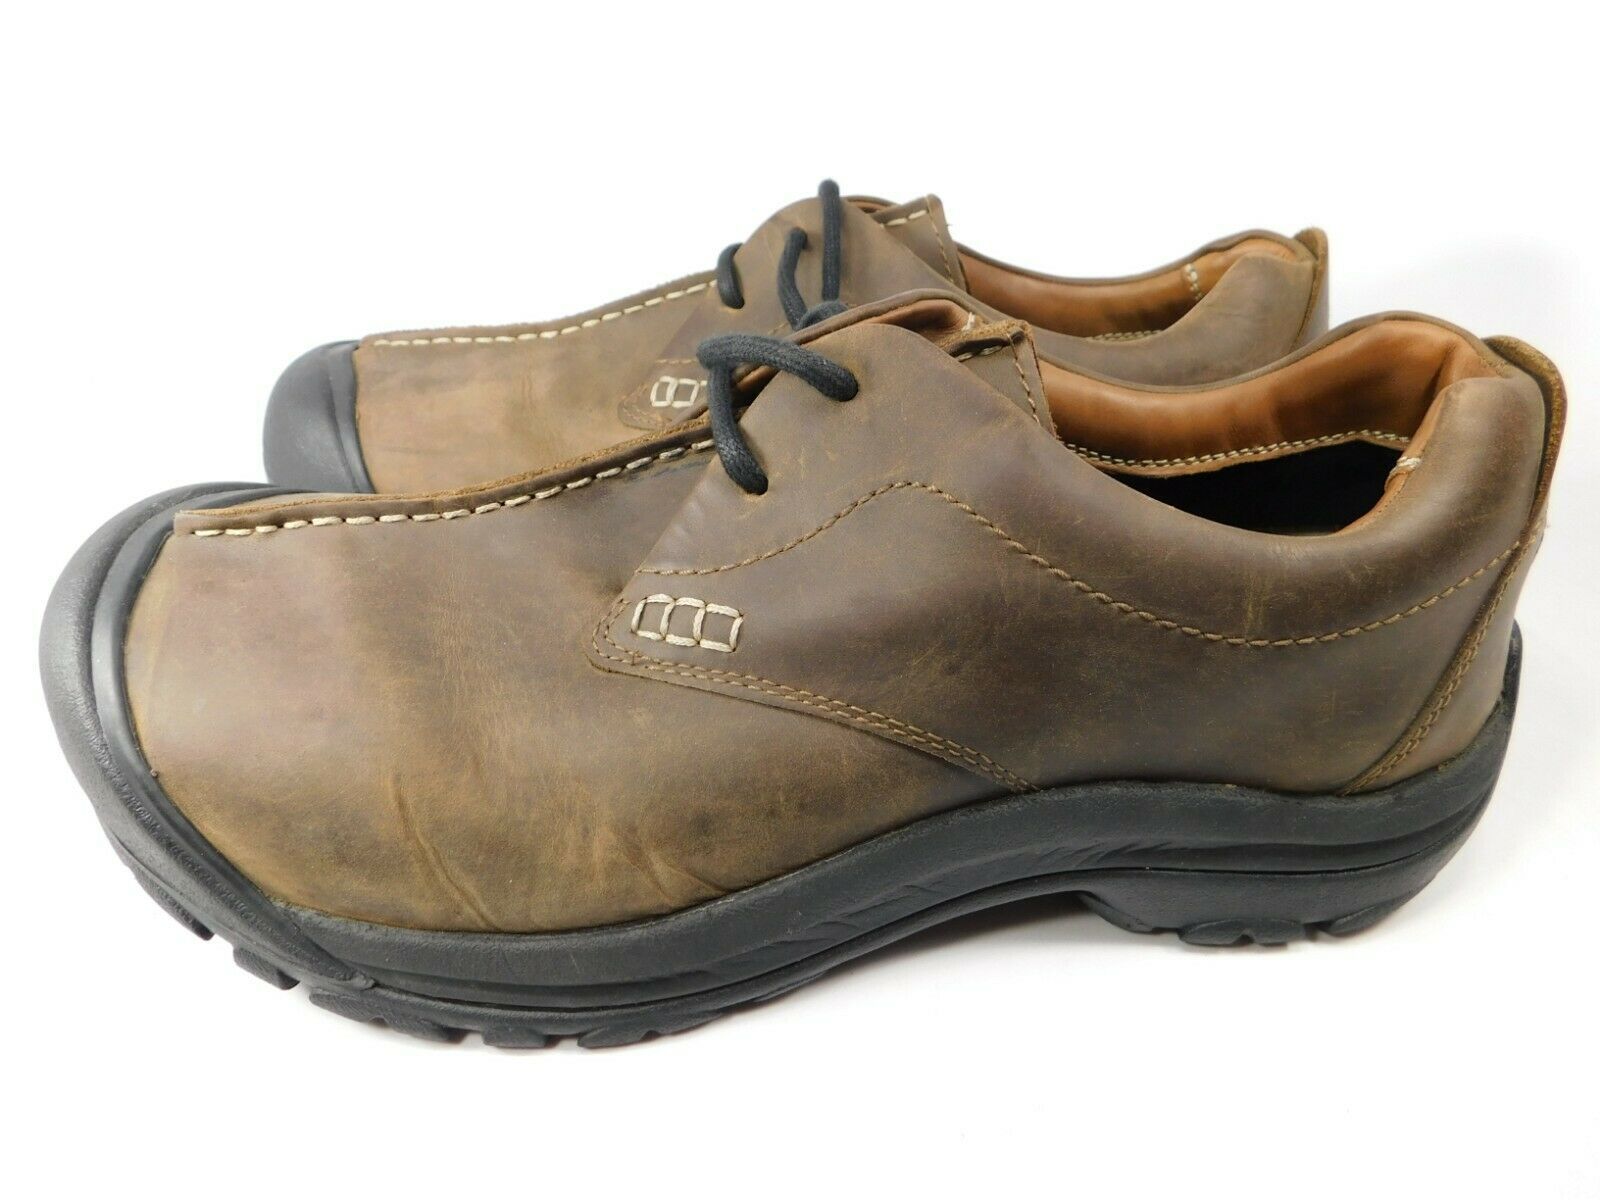 Keen Boston III Size 11.5 M (D) EU 45 Men's Lace Up Casual Shoes Brown ...